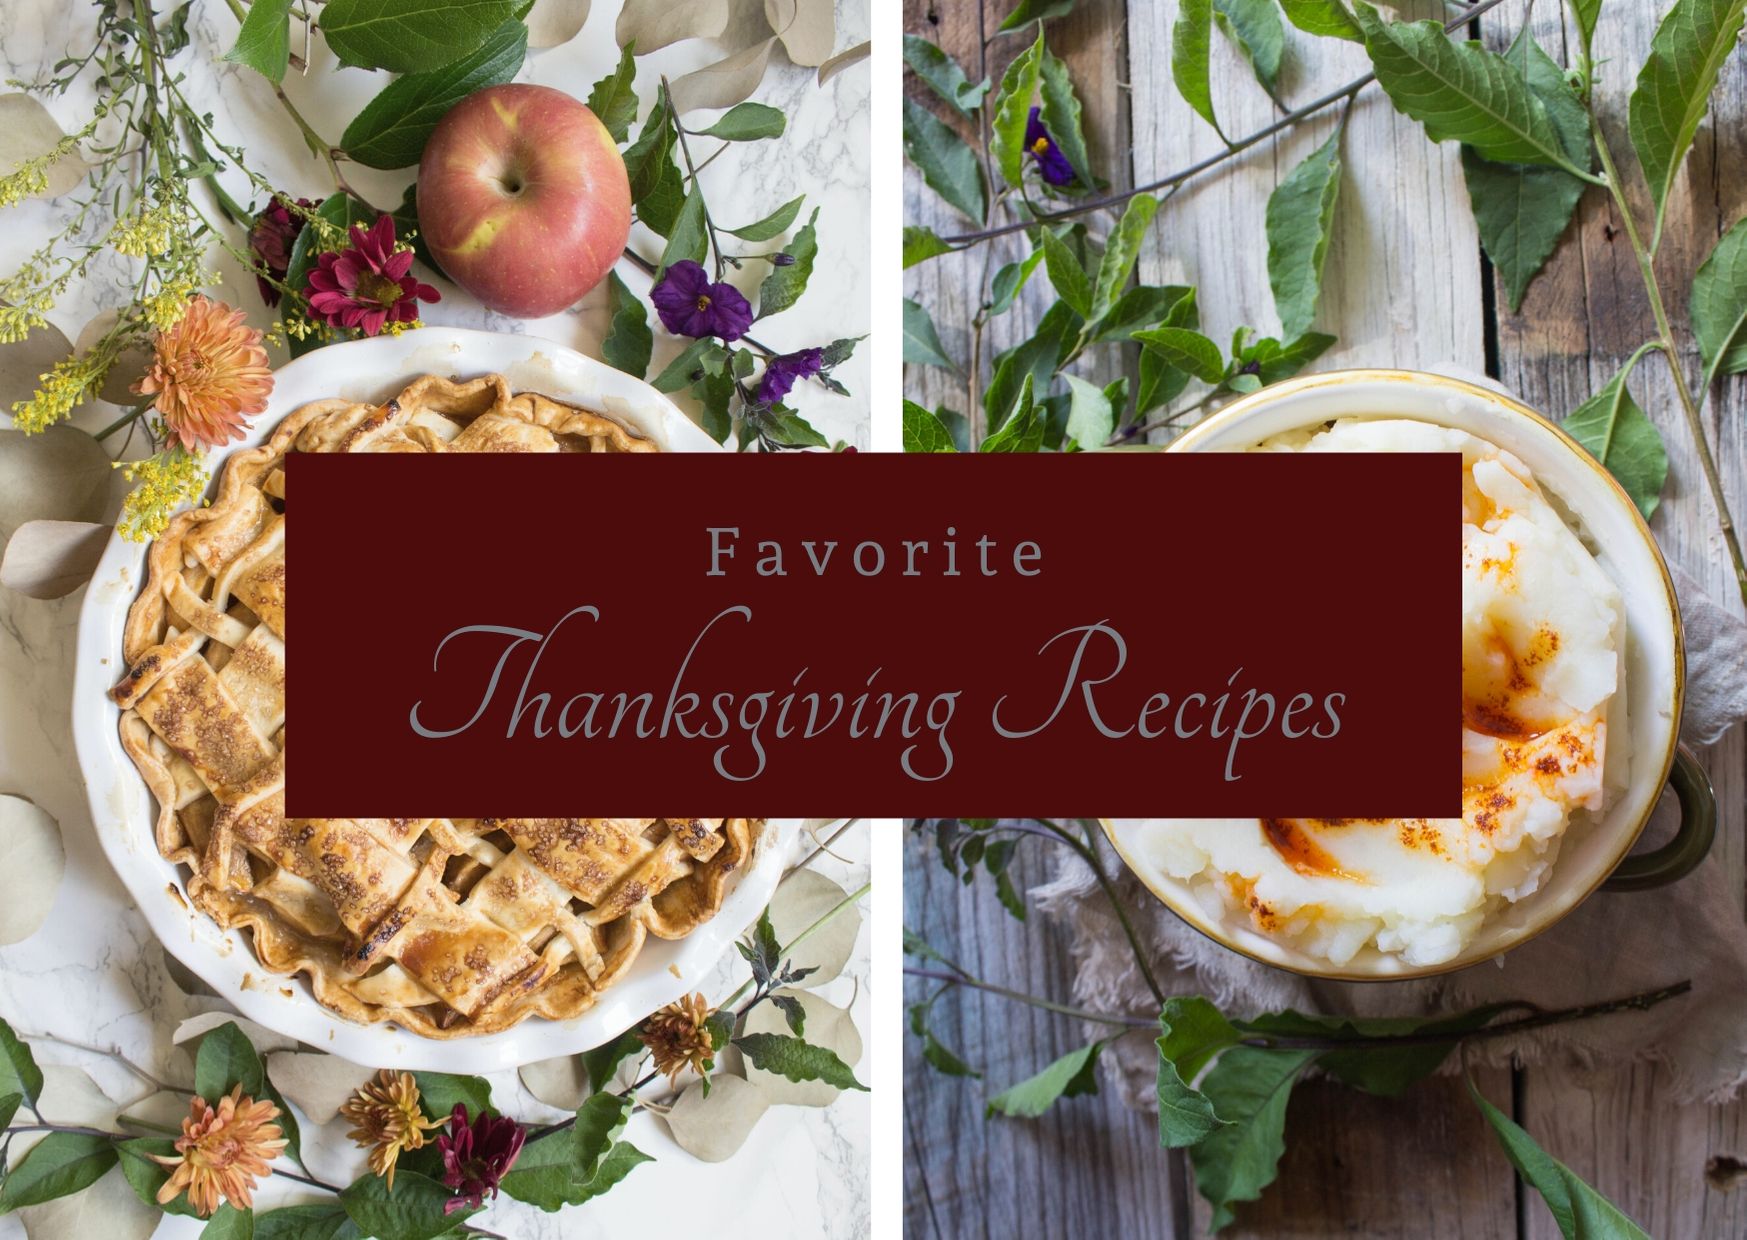 Favorite Thanksgiving Recipes 2019